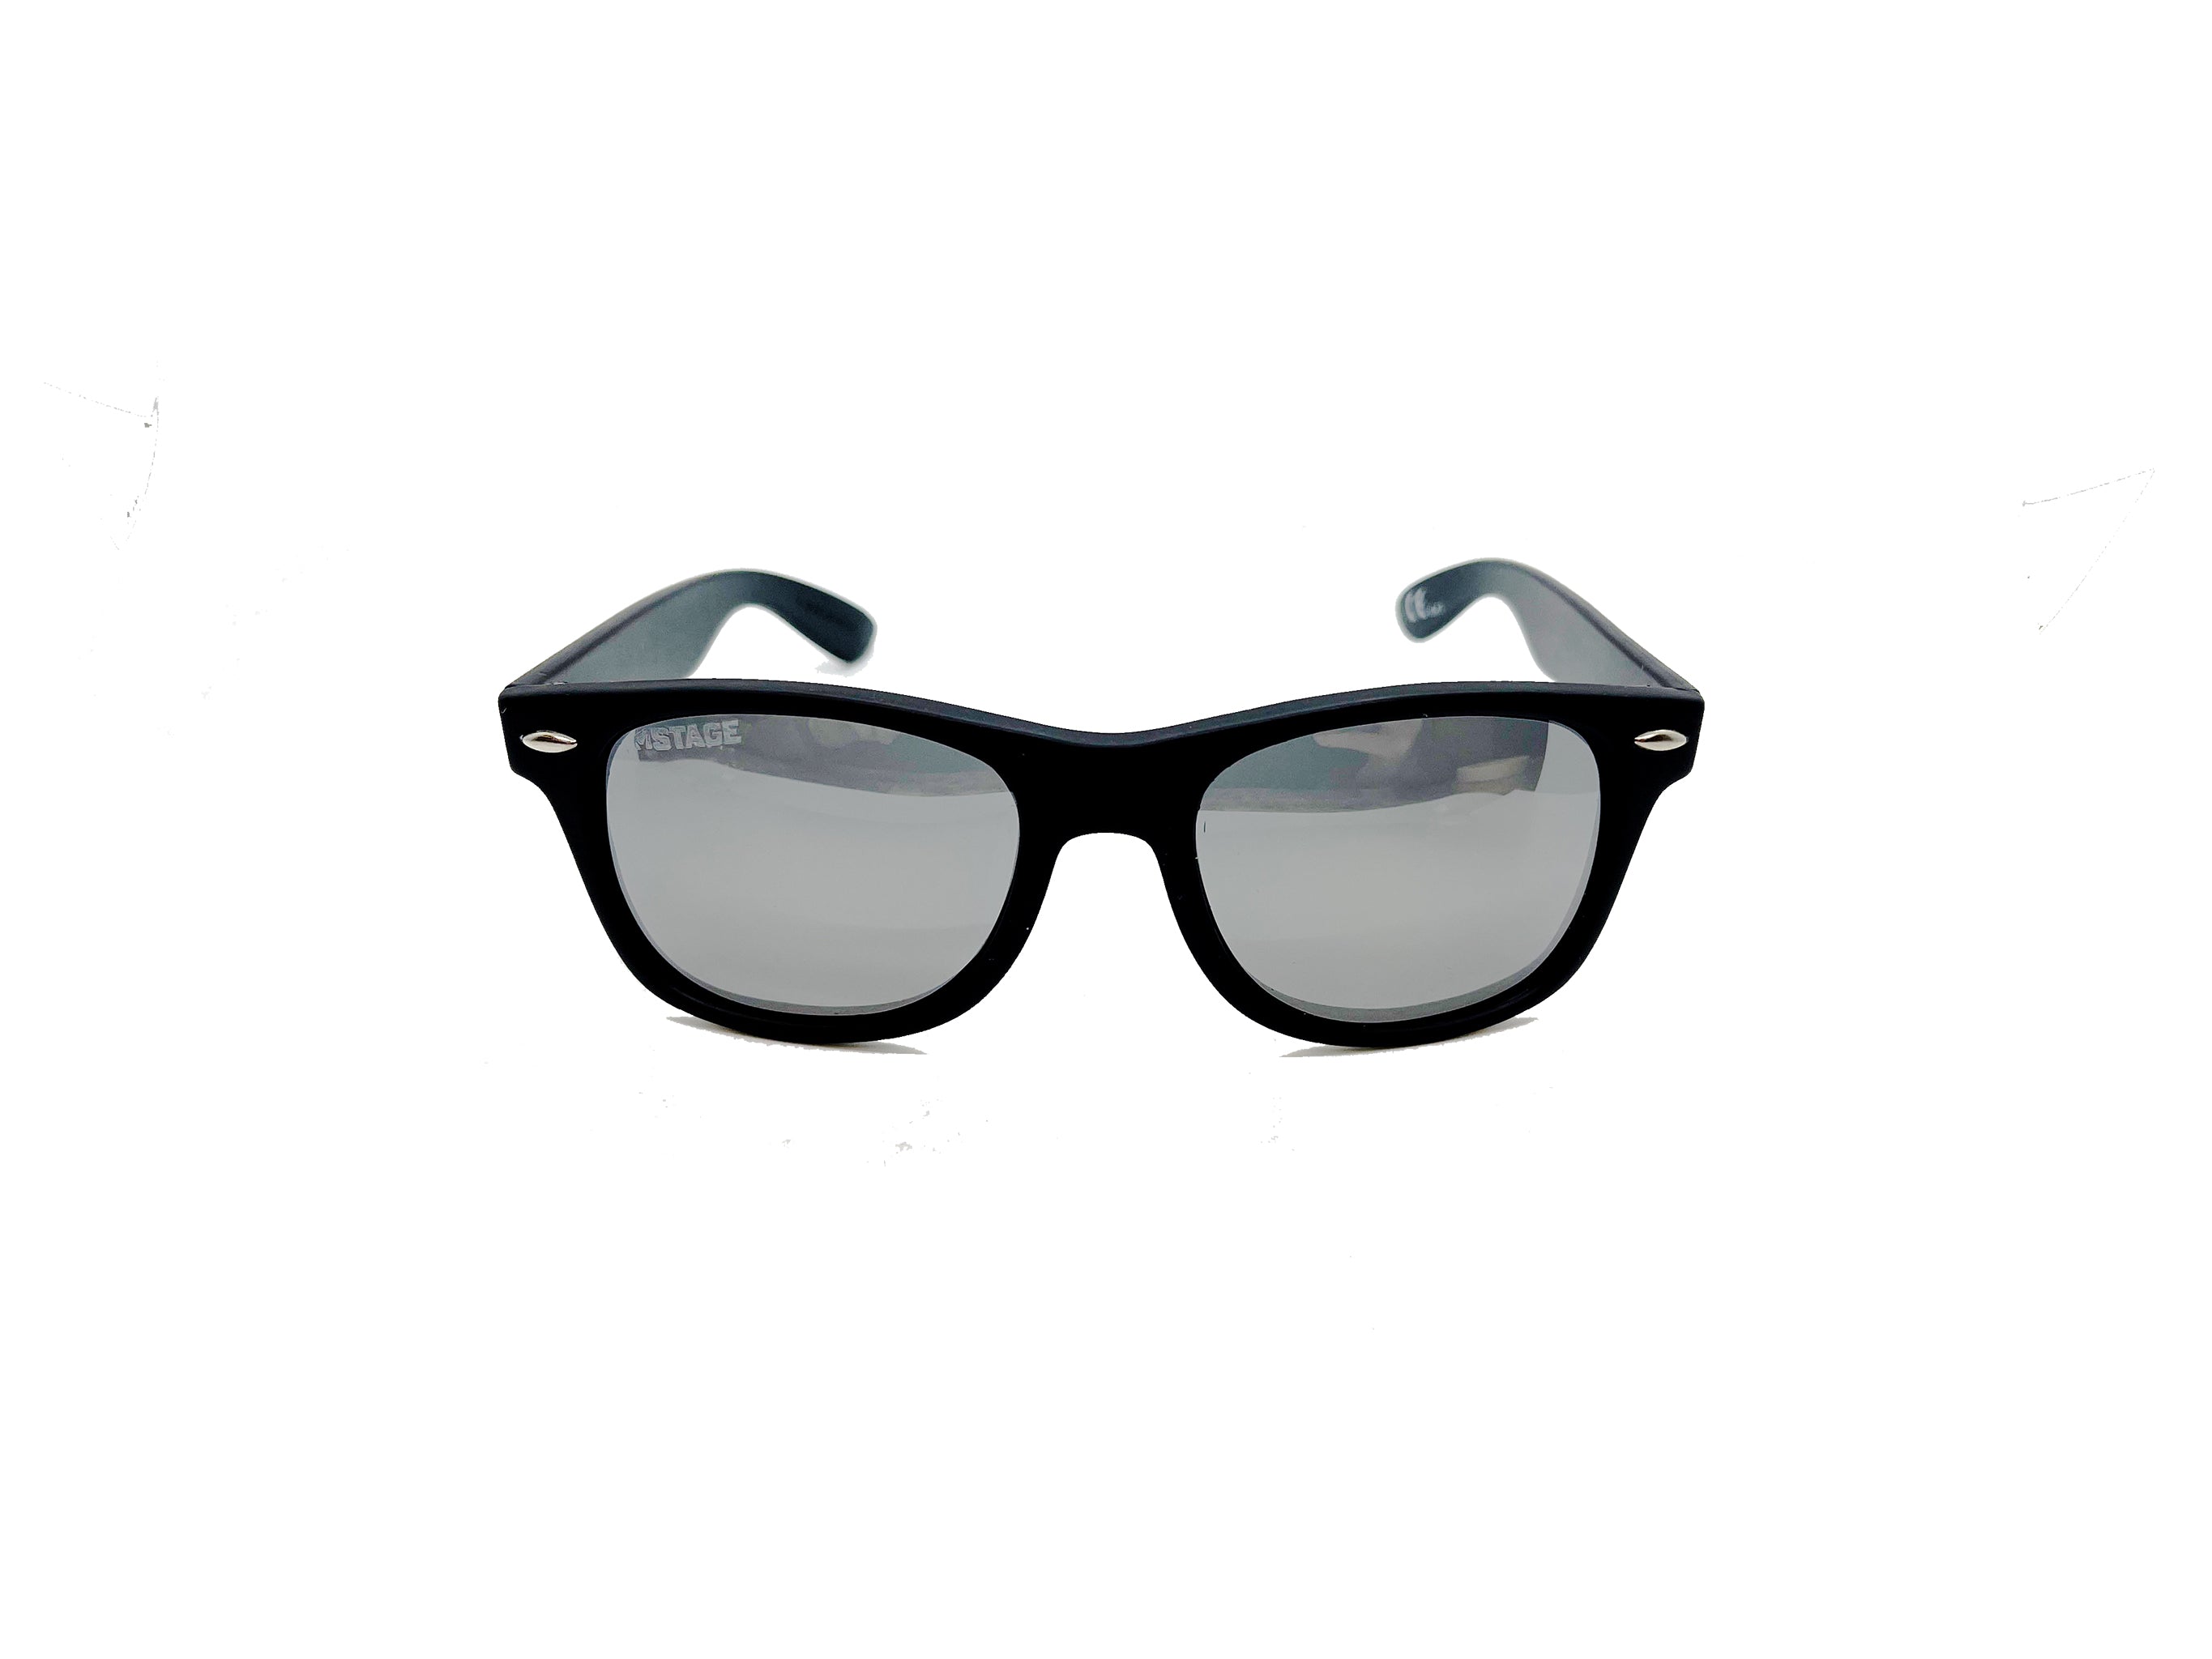 STAGE Floating Sunglasses - Mirror Chrome Lens - Polarized - Revo Lenses - UV400 Protection - Float in Water